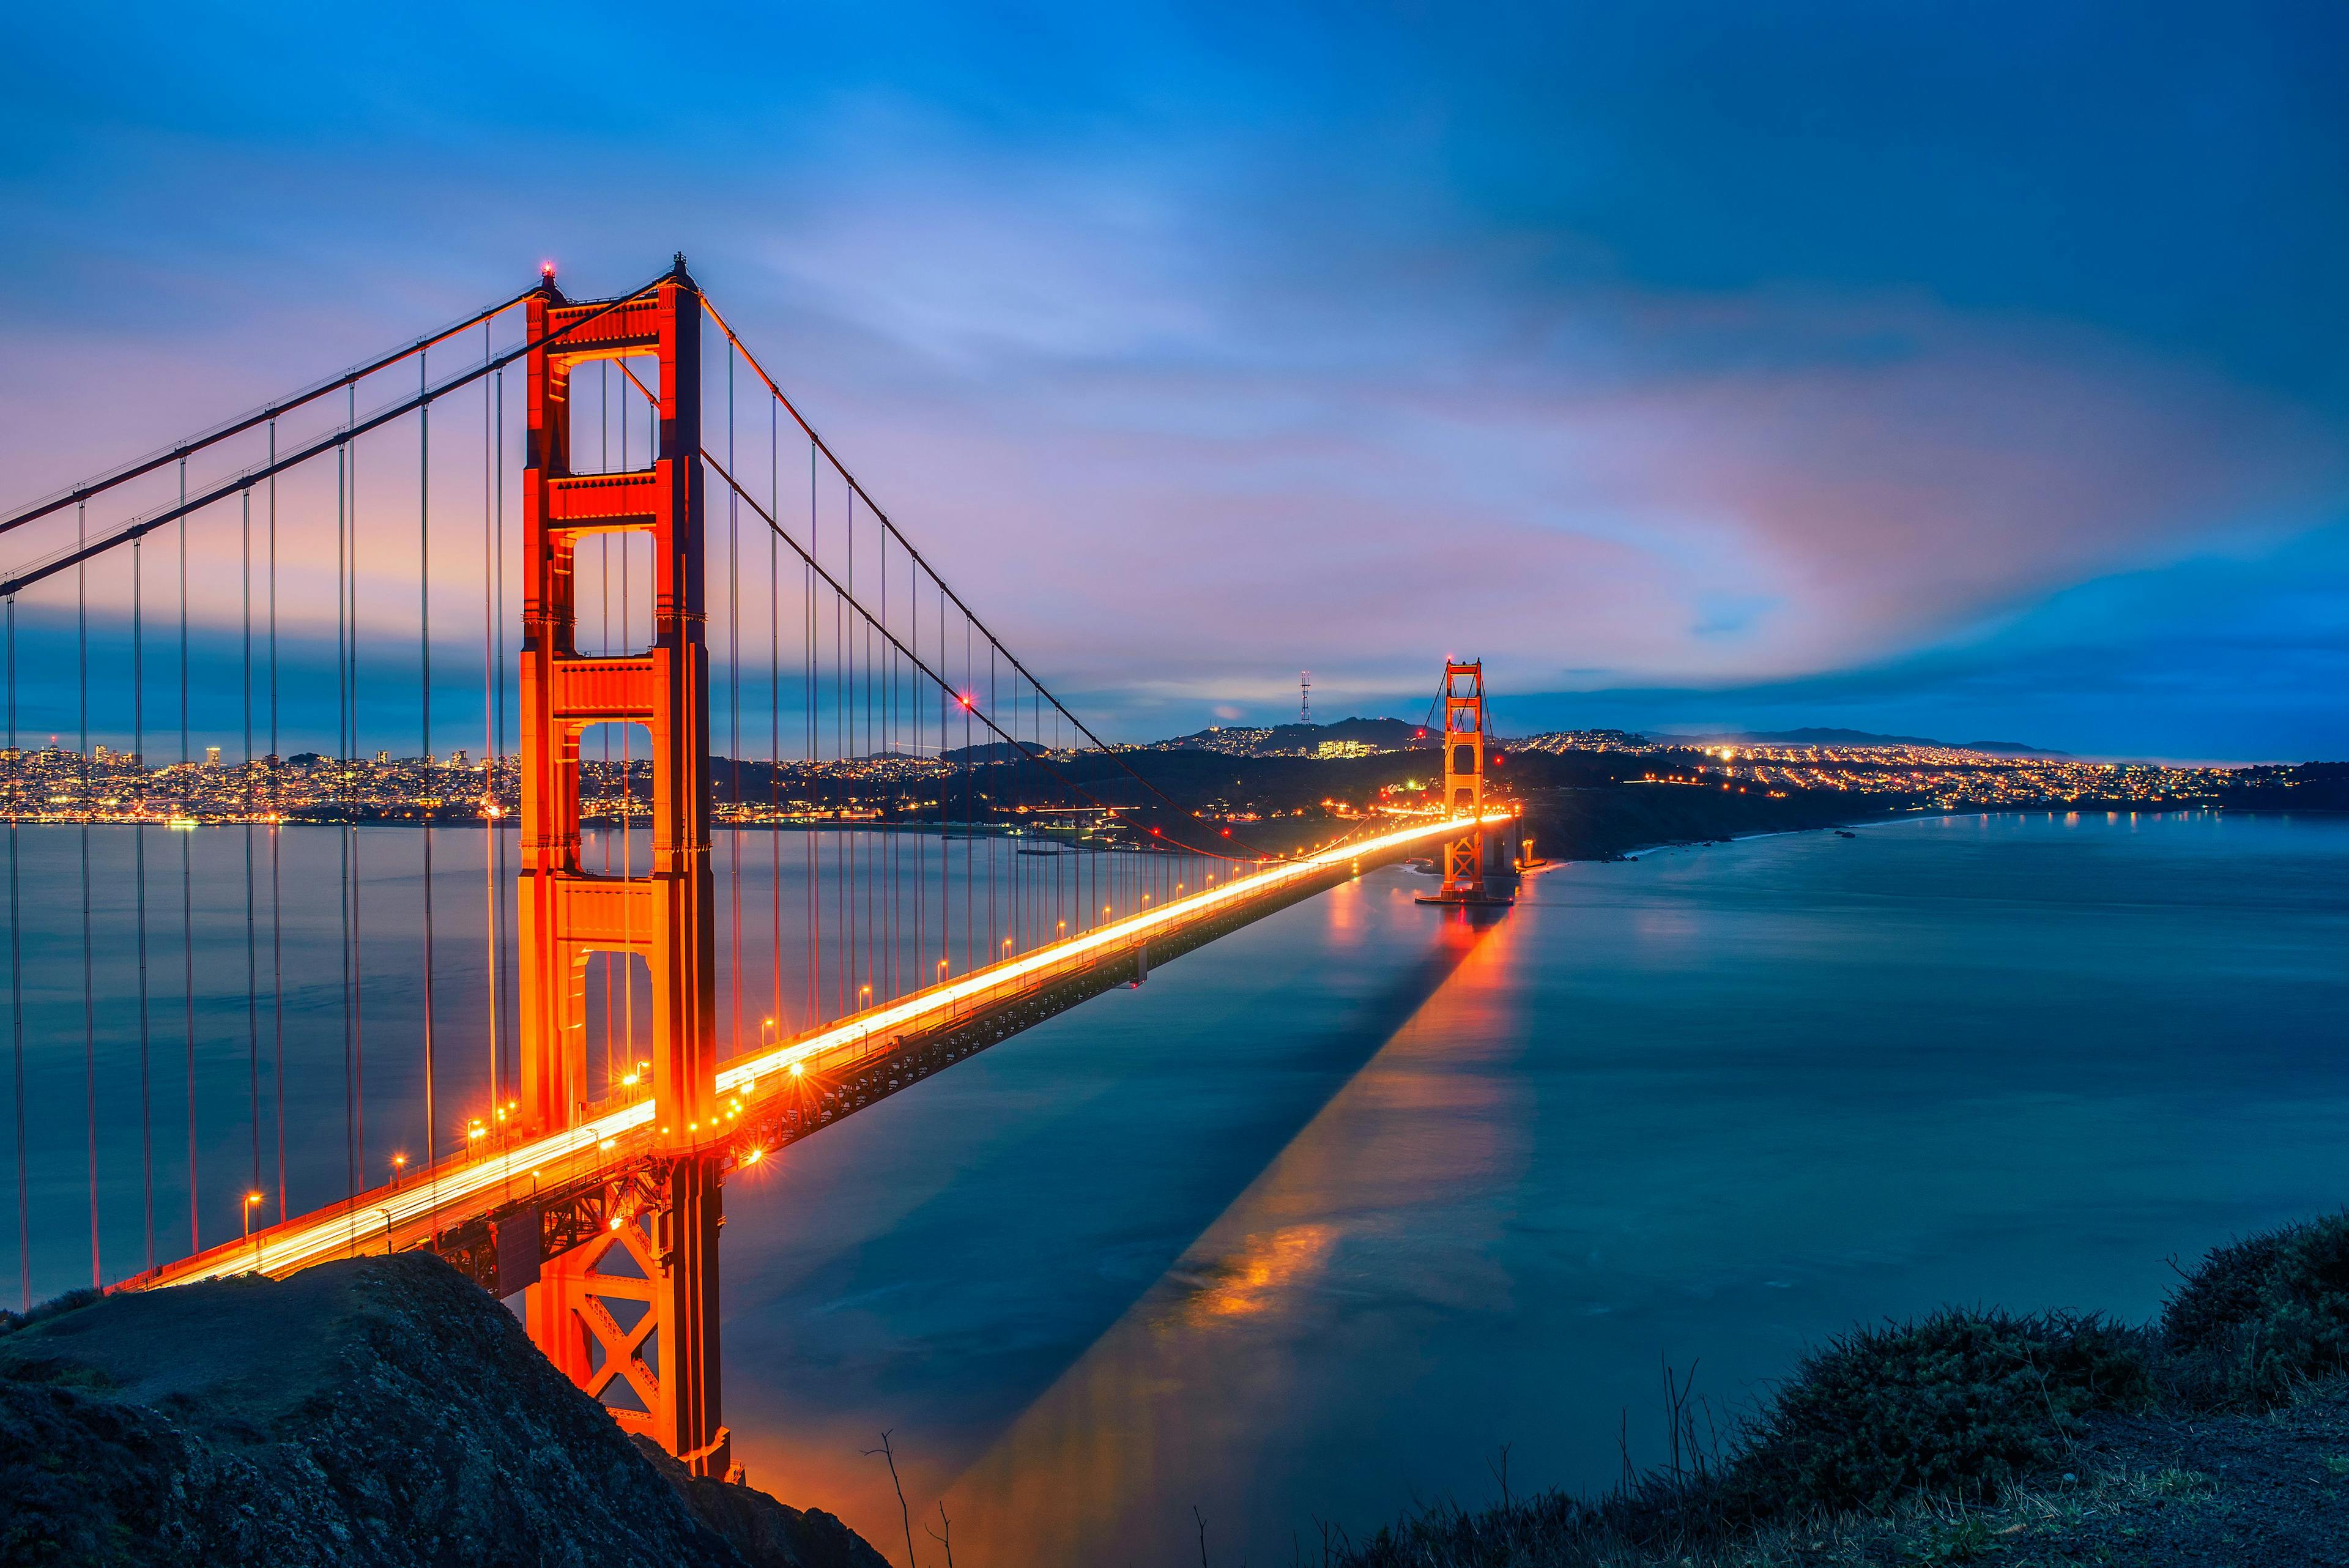 A photo of the Golden Gate bridge